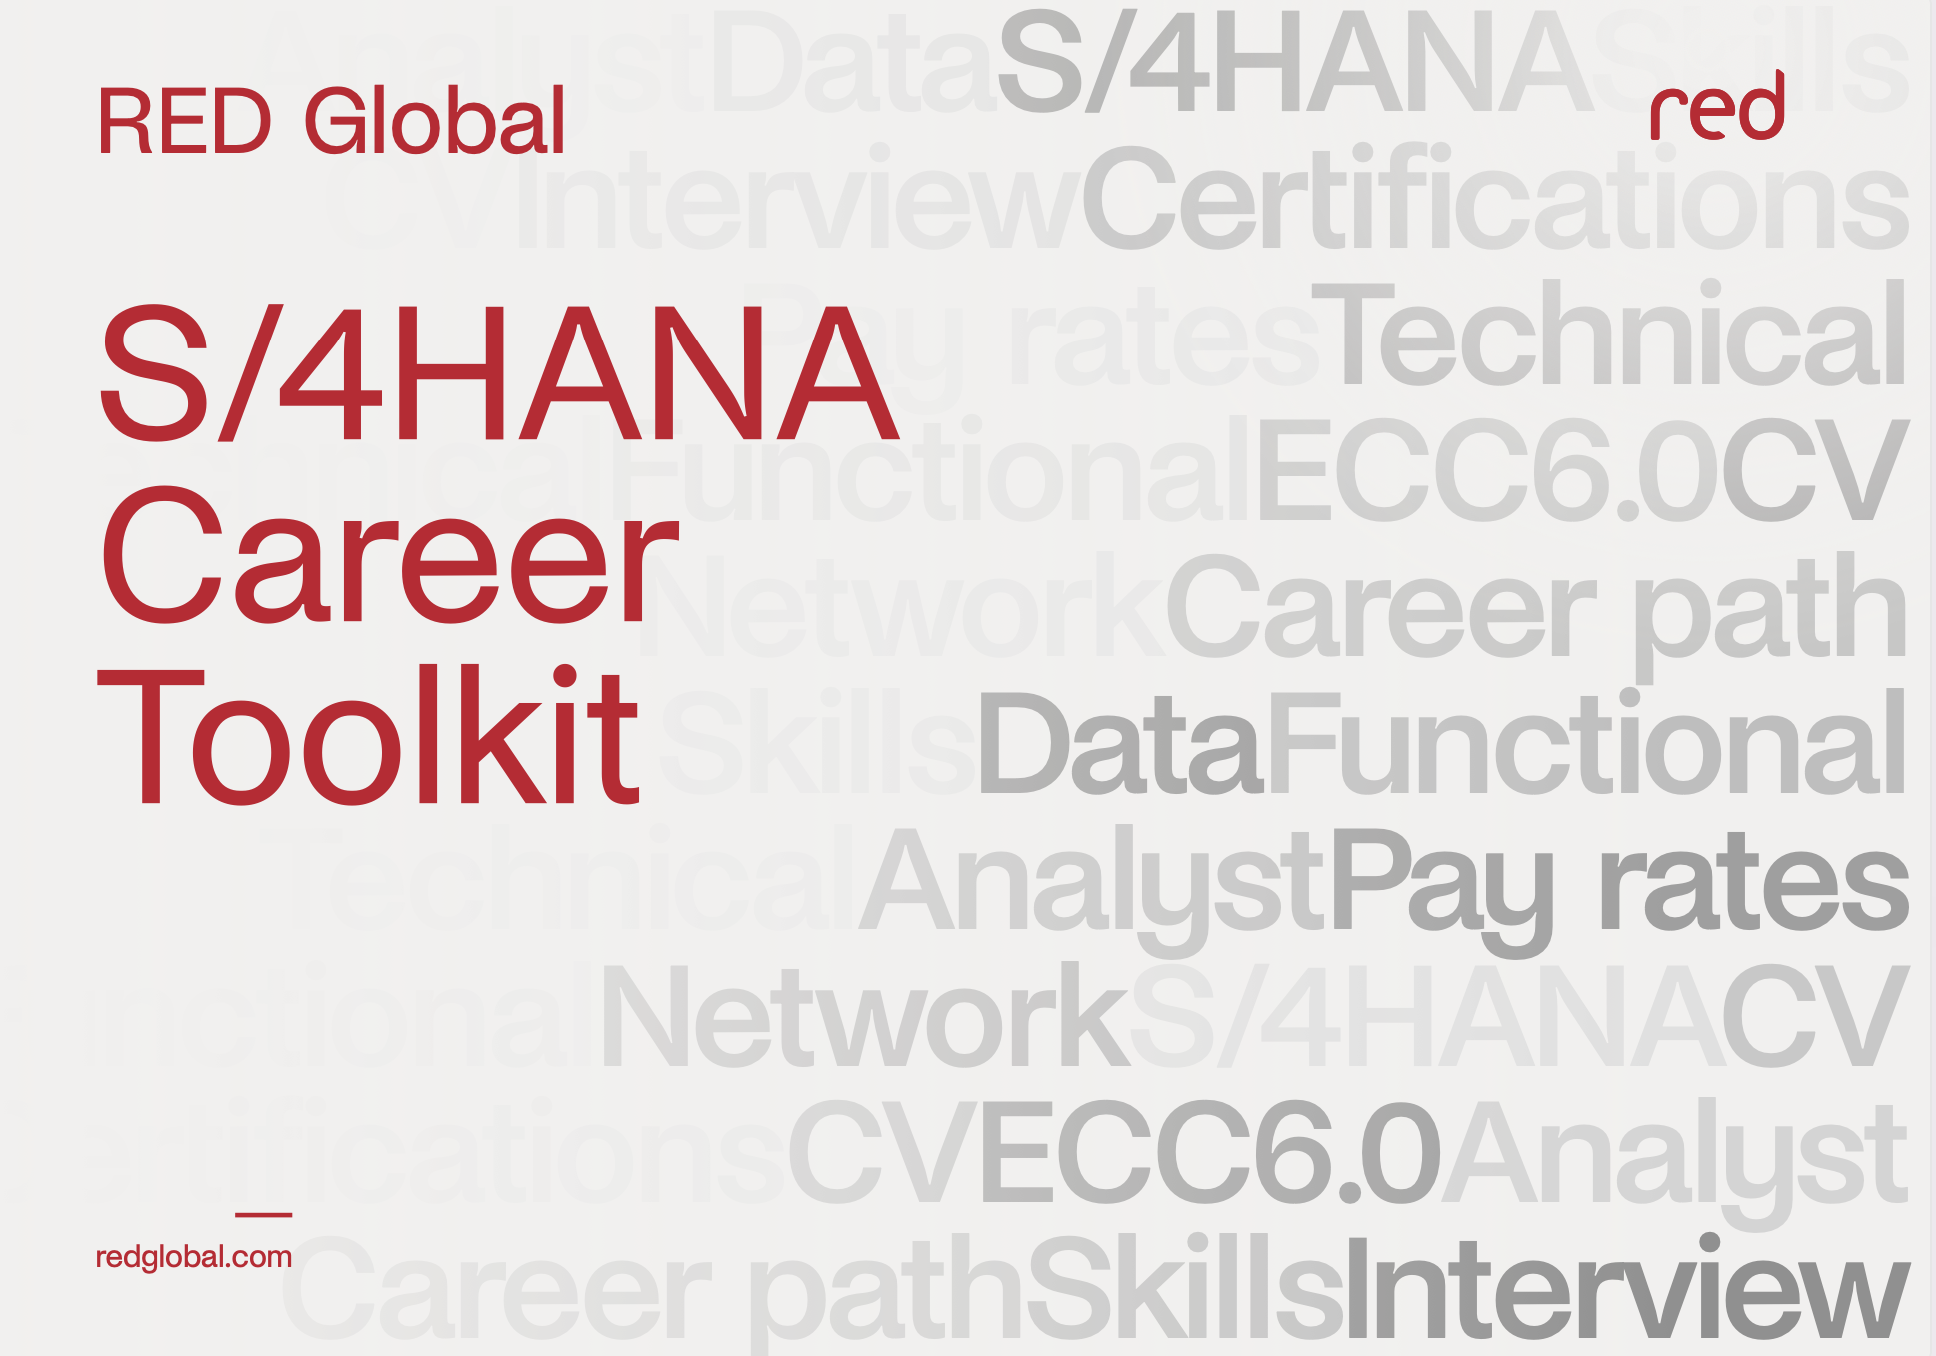 Your S/4HANA Career Toolkit